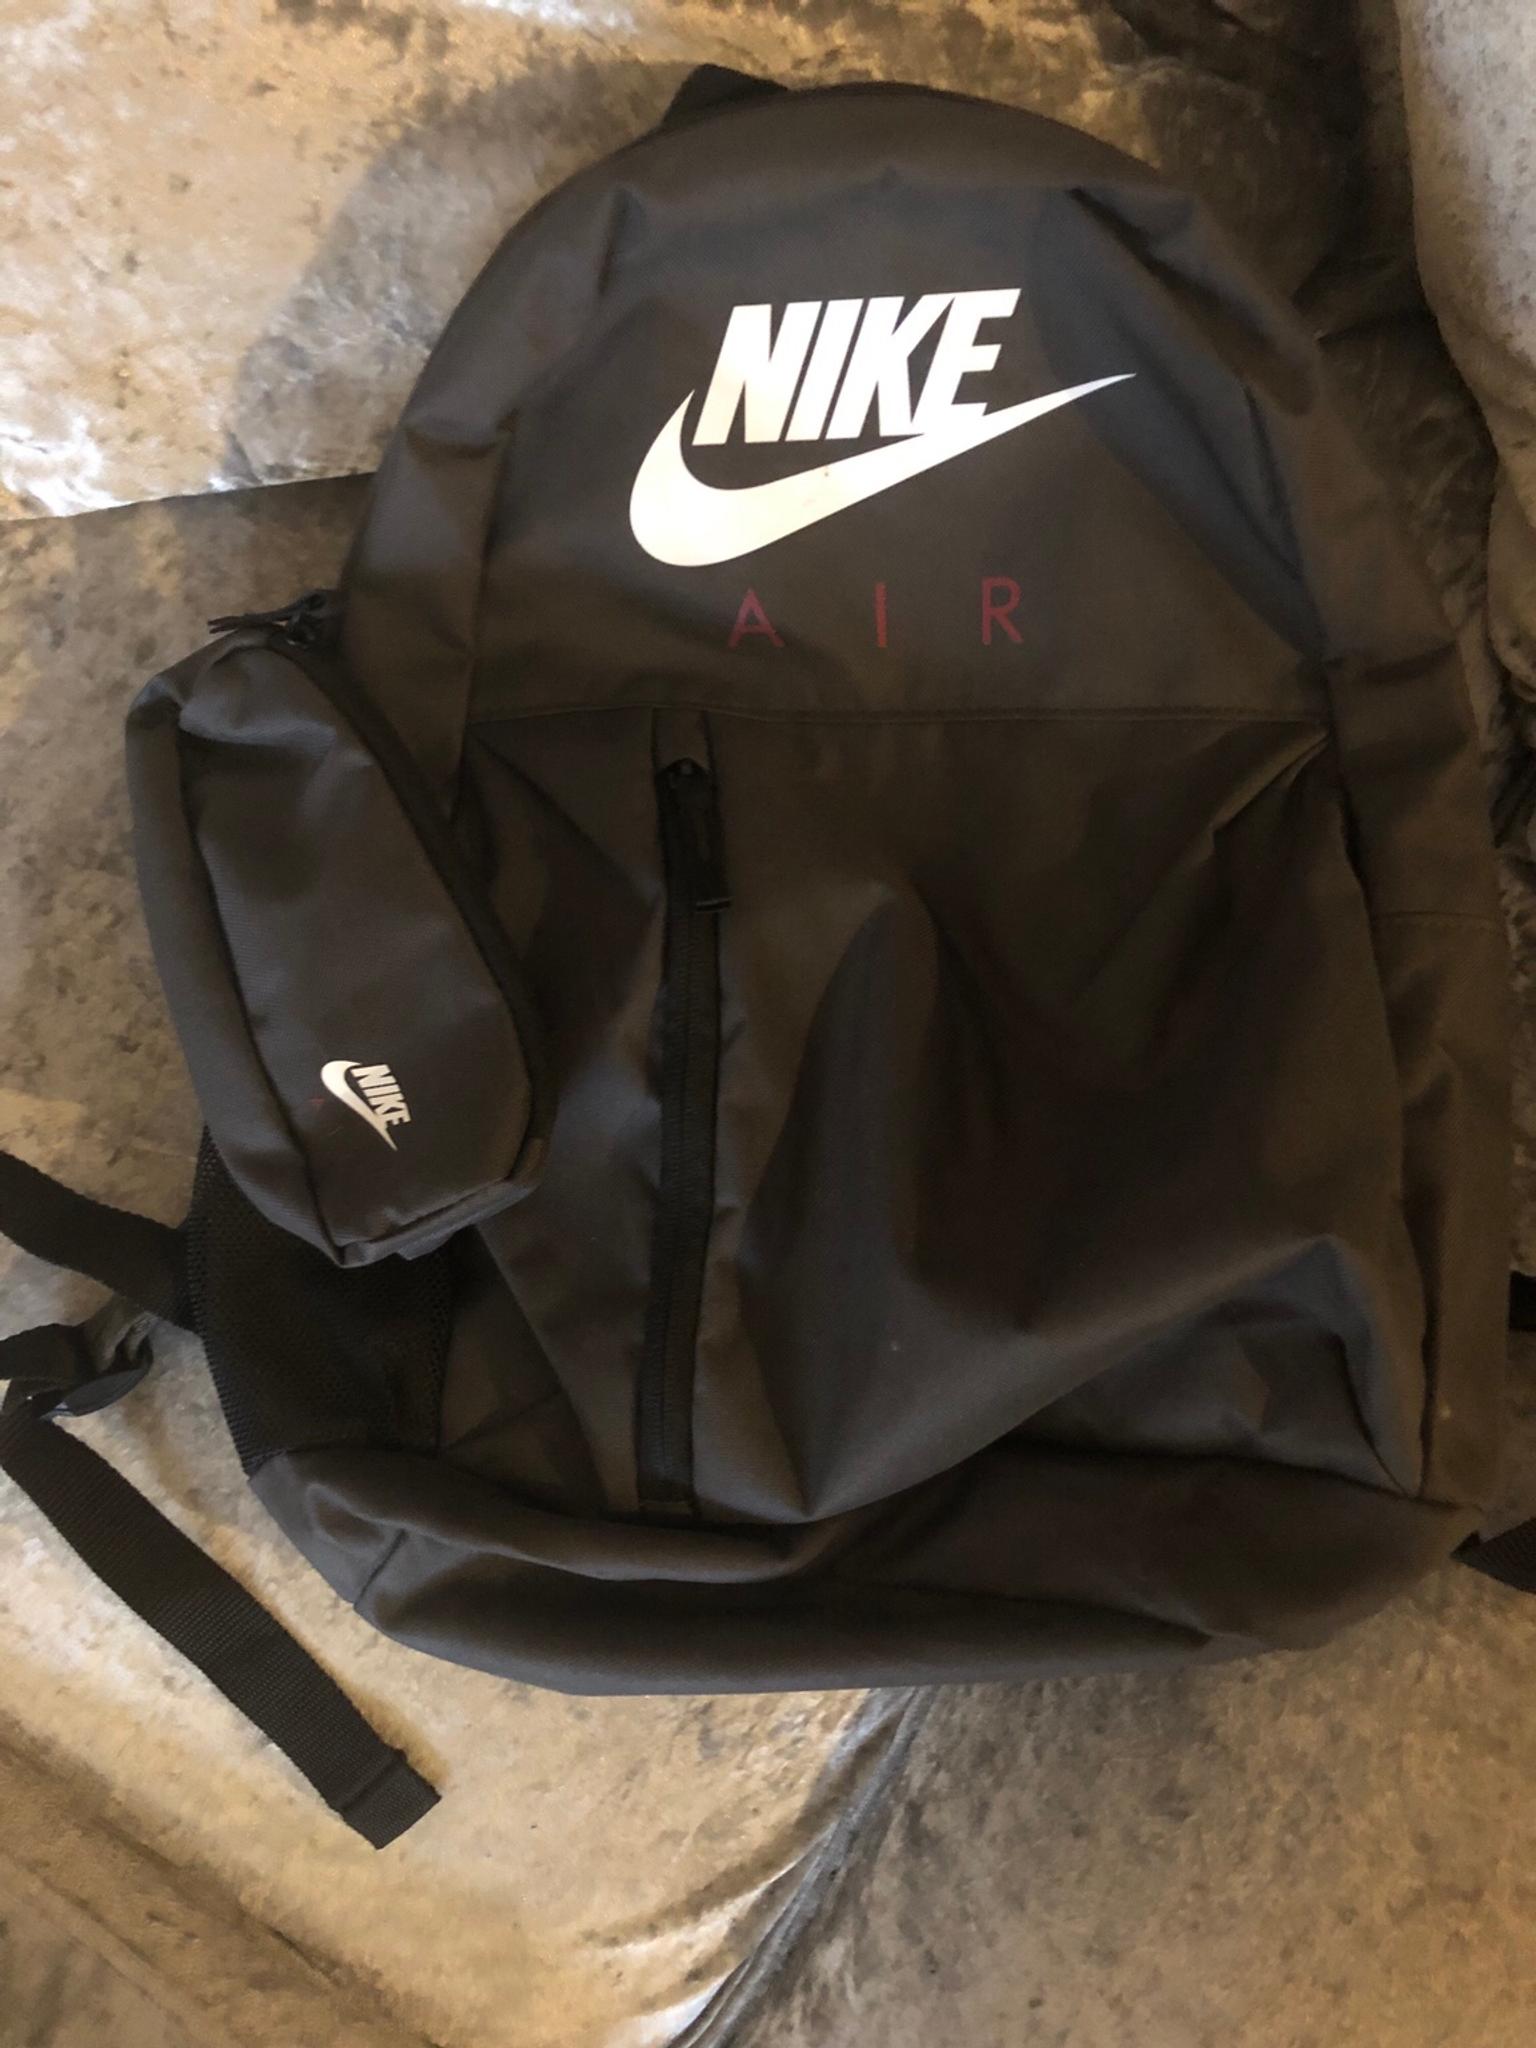 nike air bag with pencil case